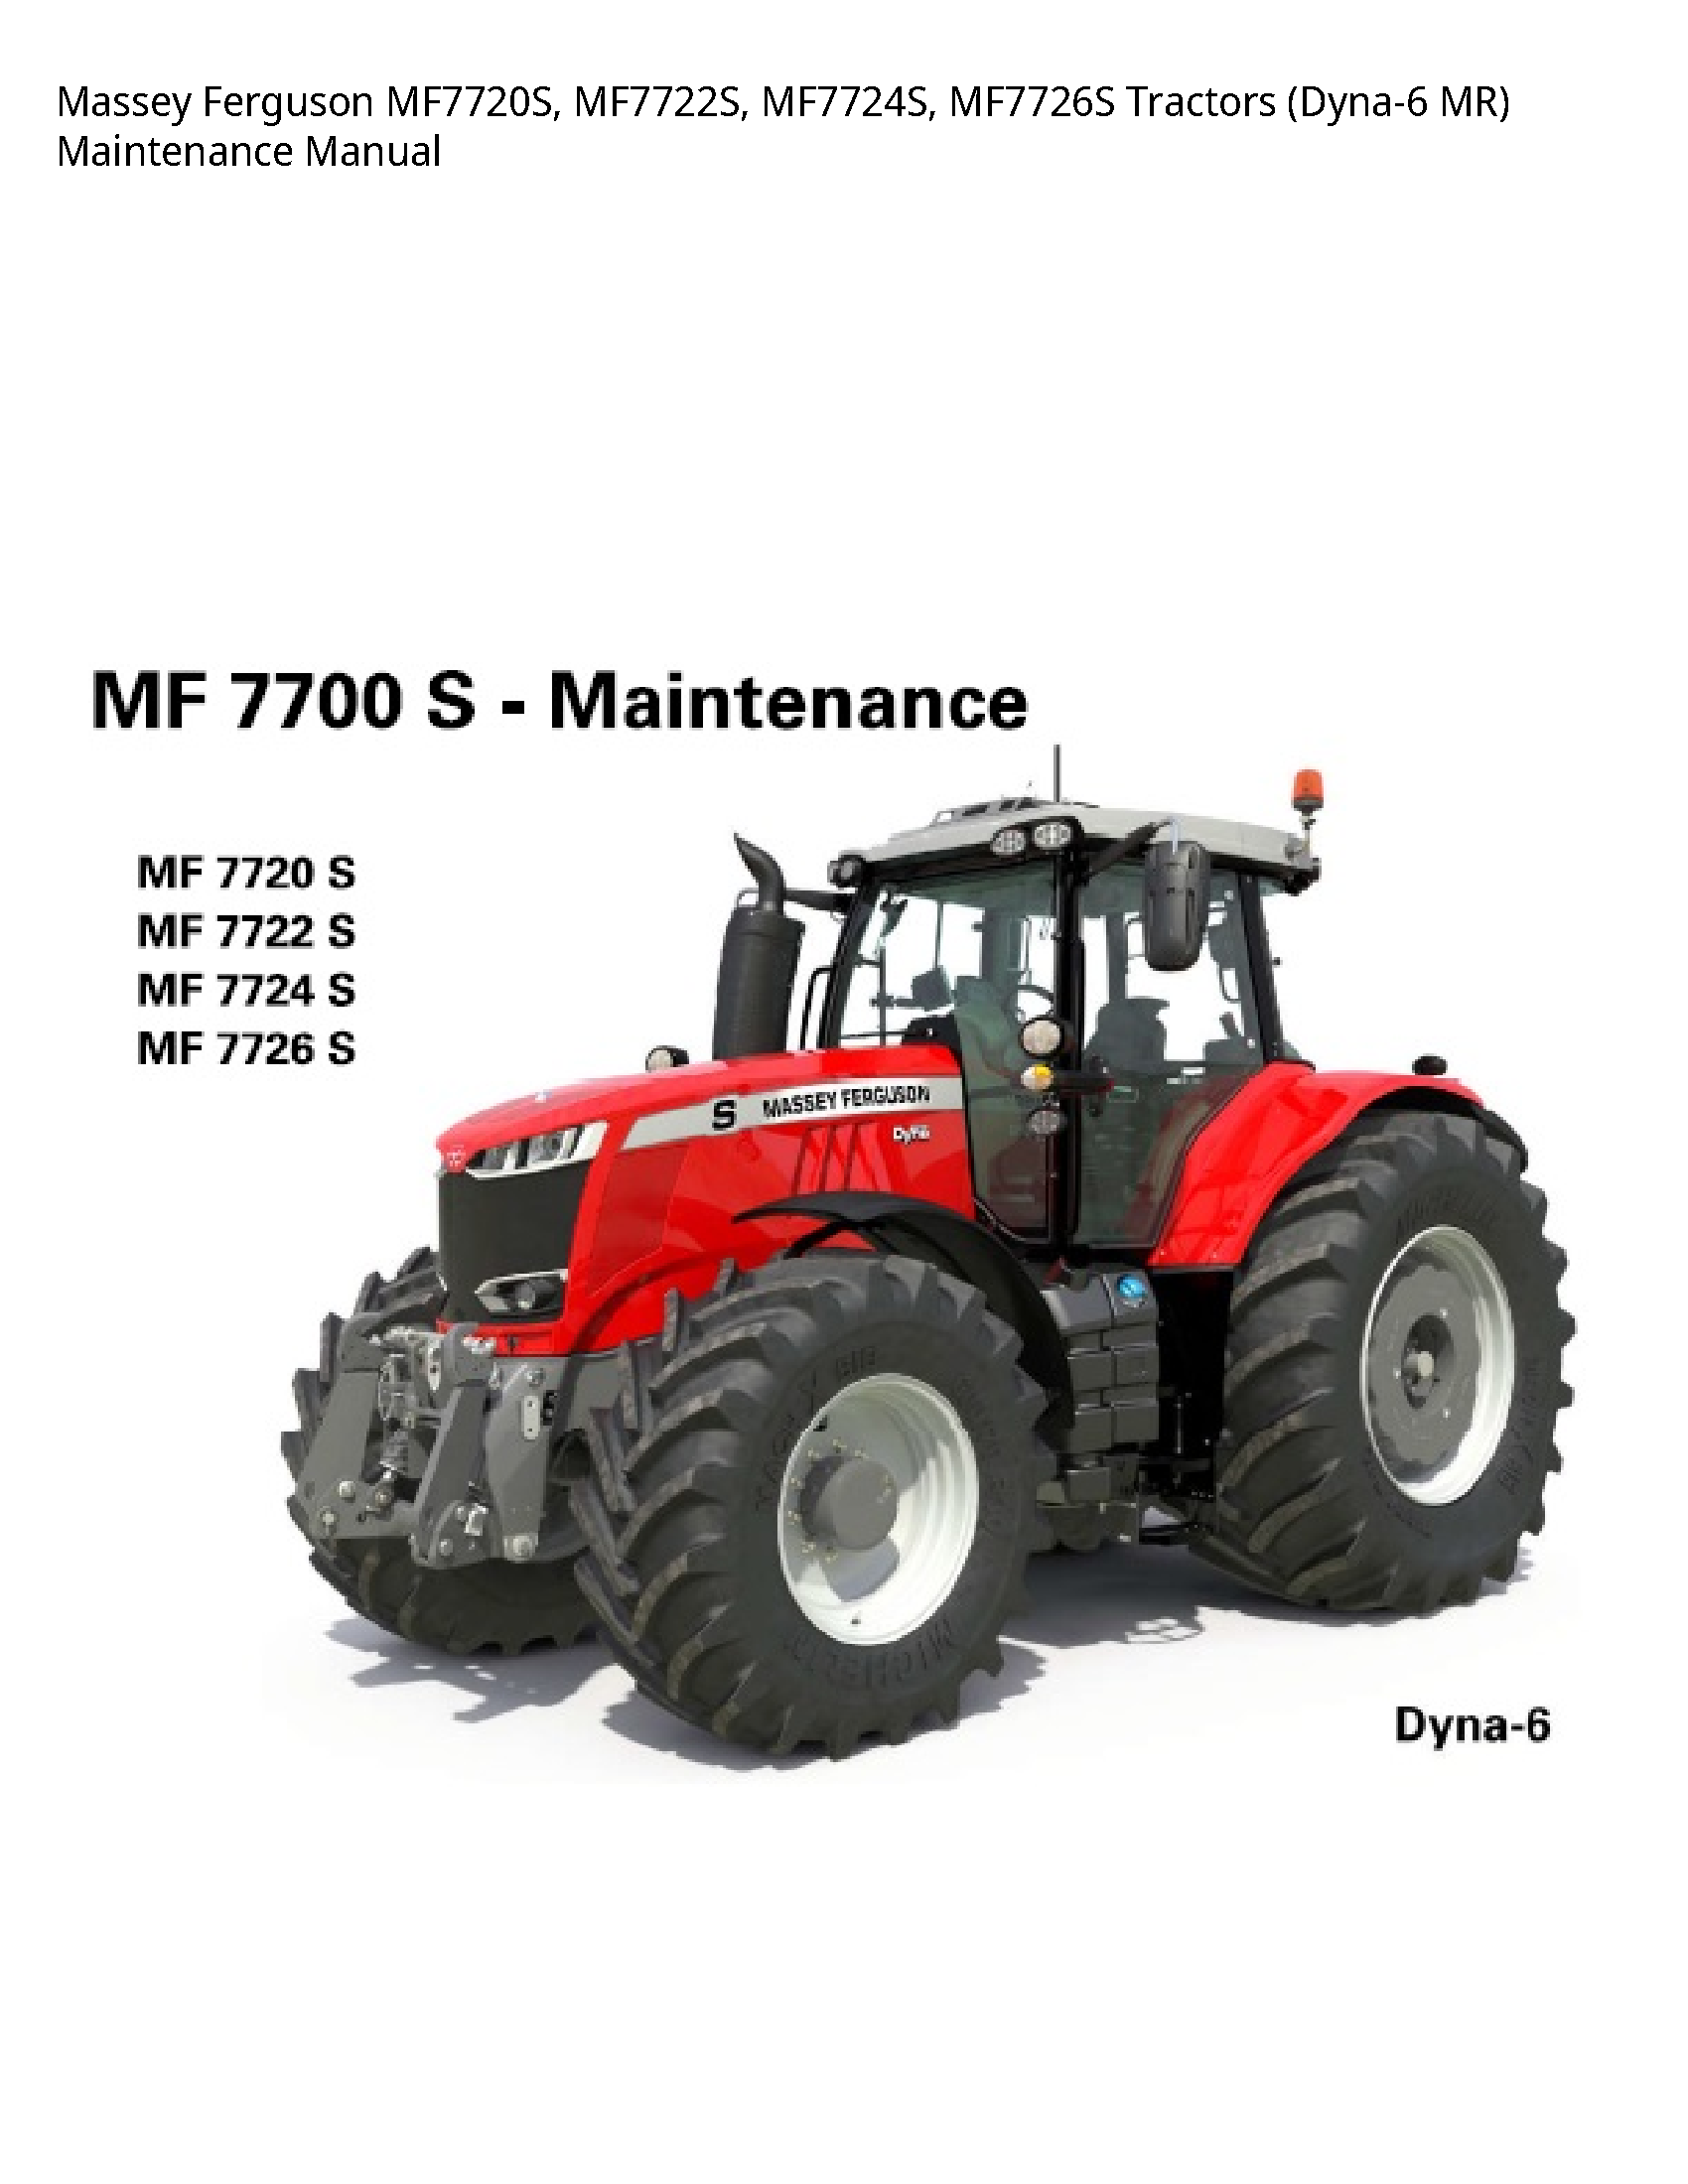 Massey Ferguson MF7720S Tractors MR) Maintenance manual